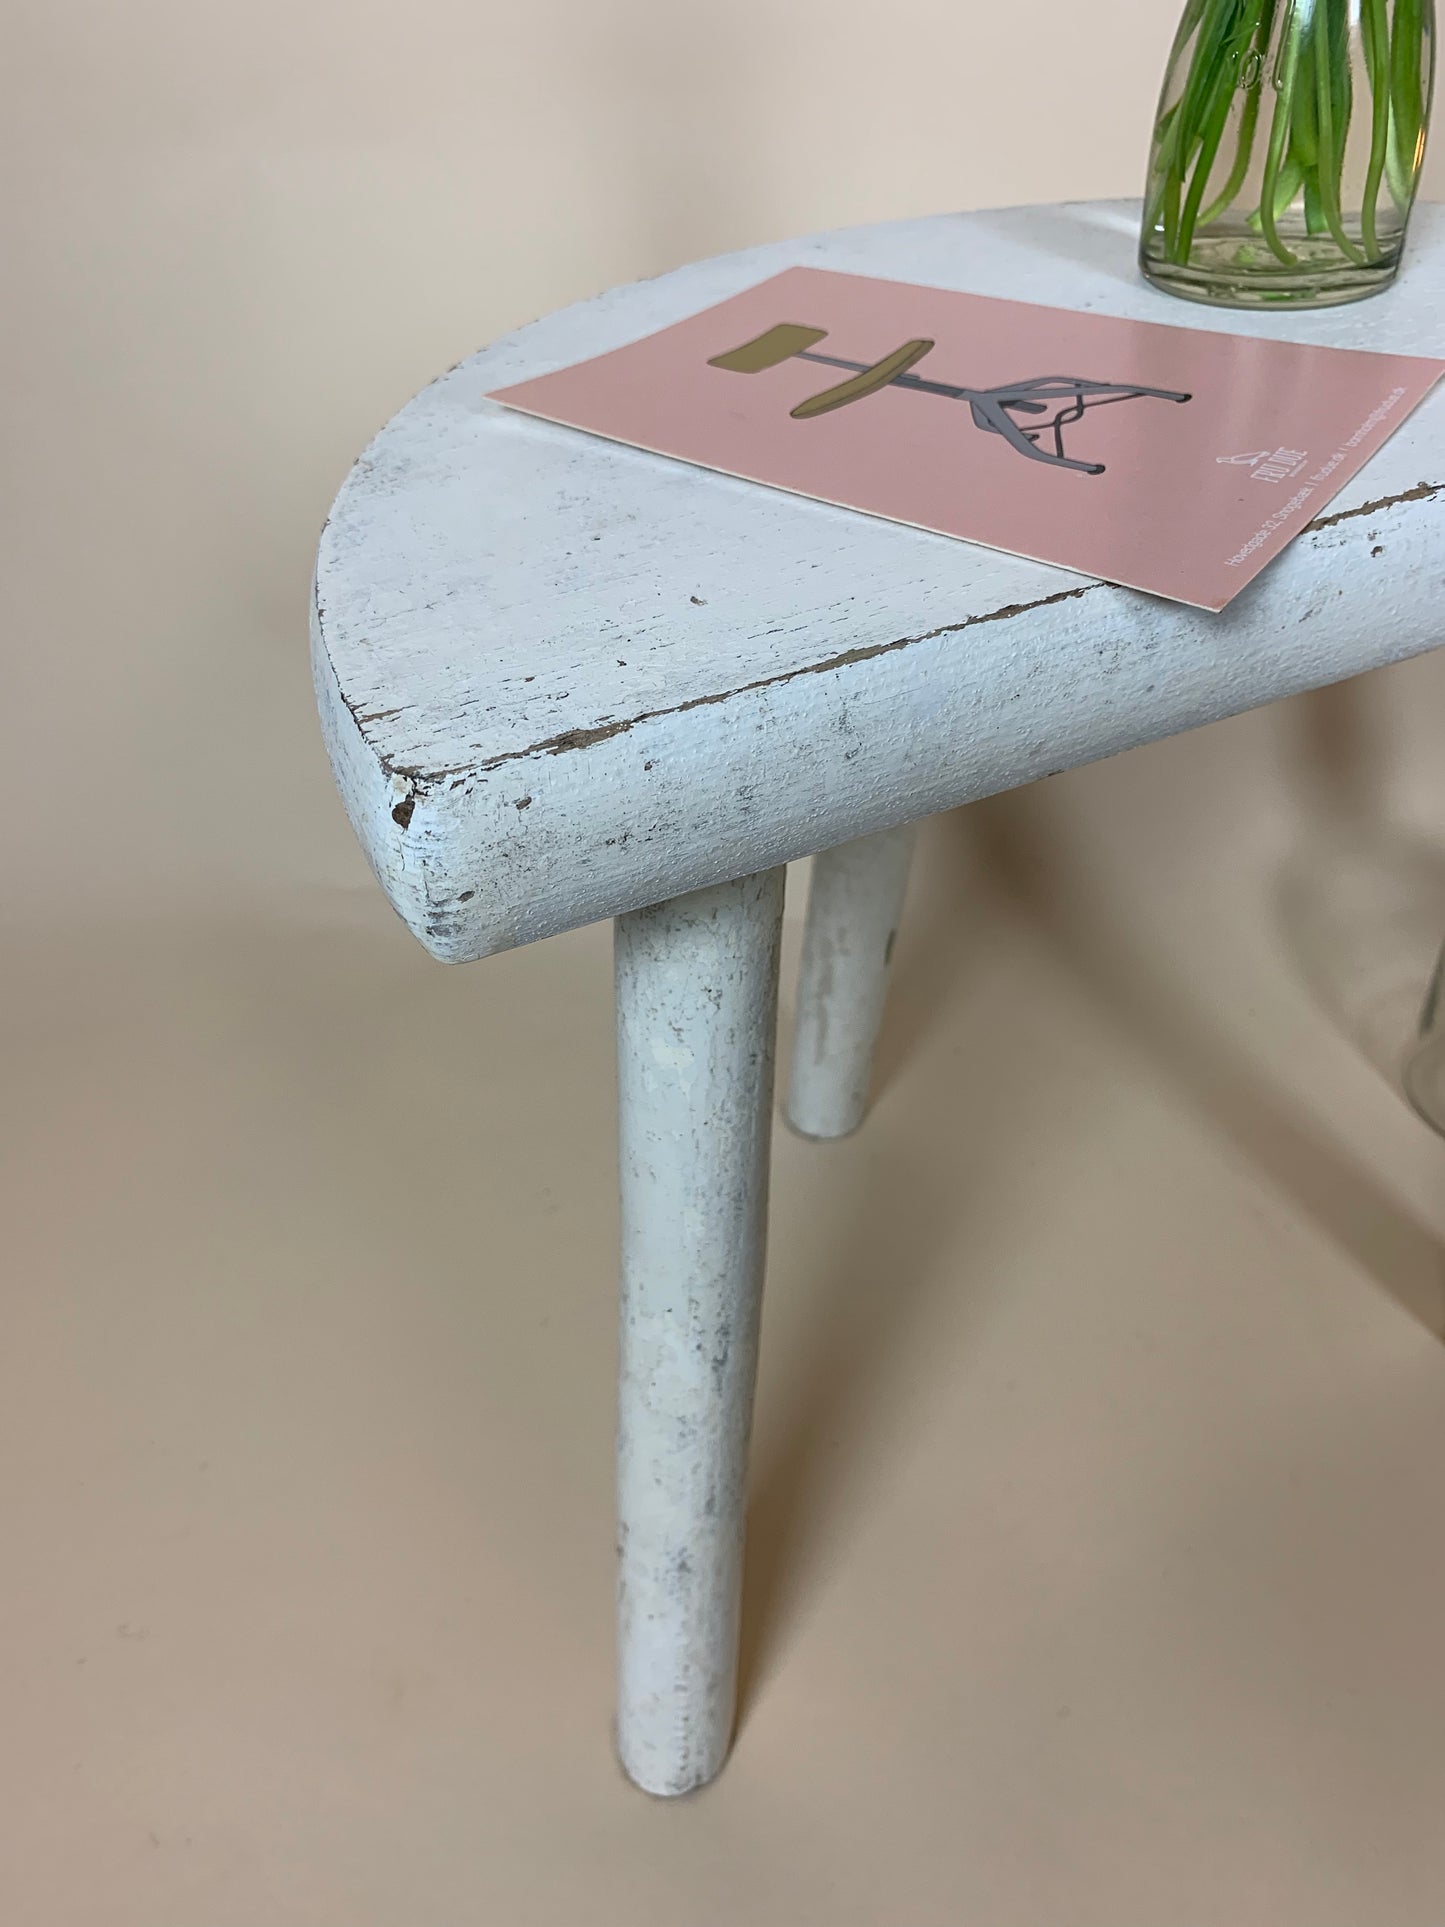 Dekorativ lille malkeskammel eller malkestol